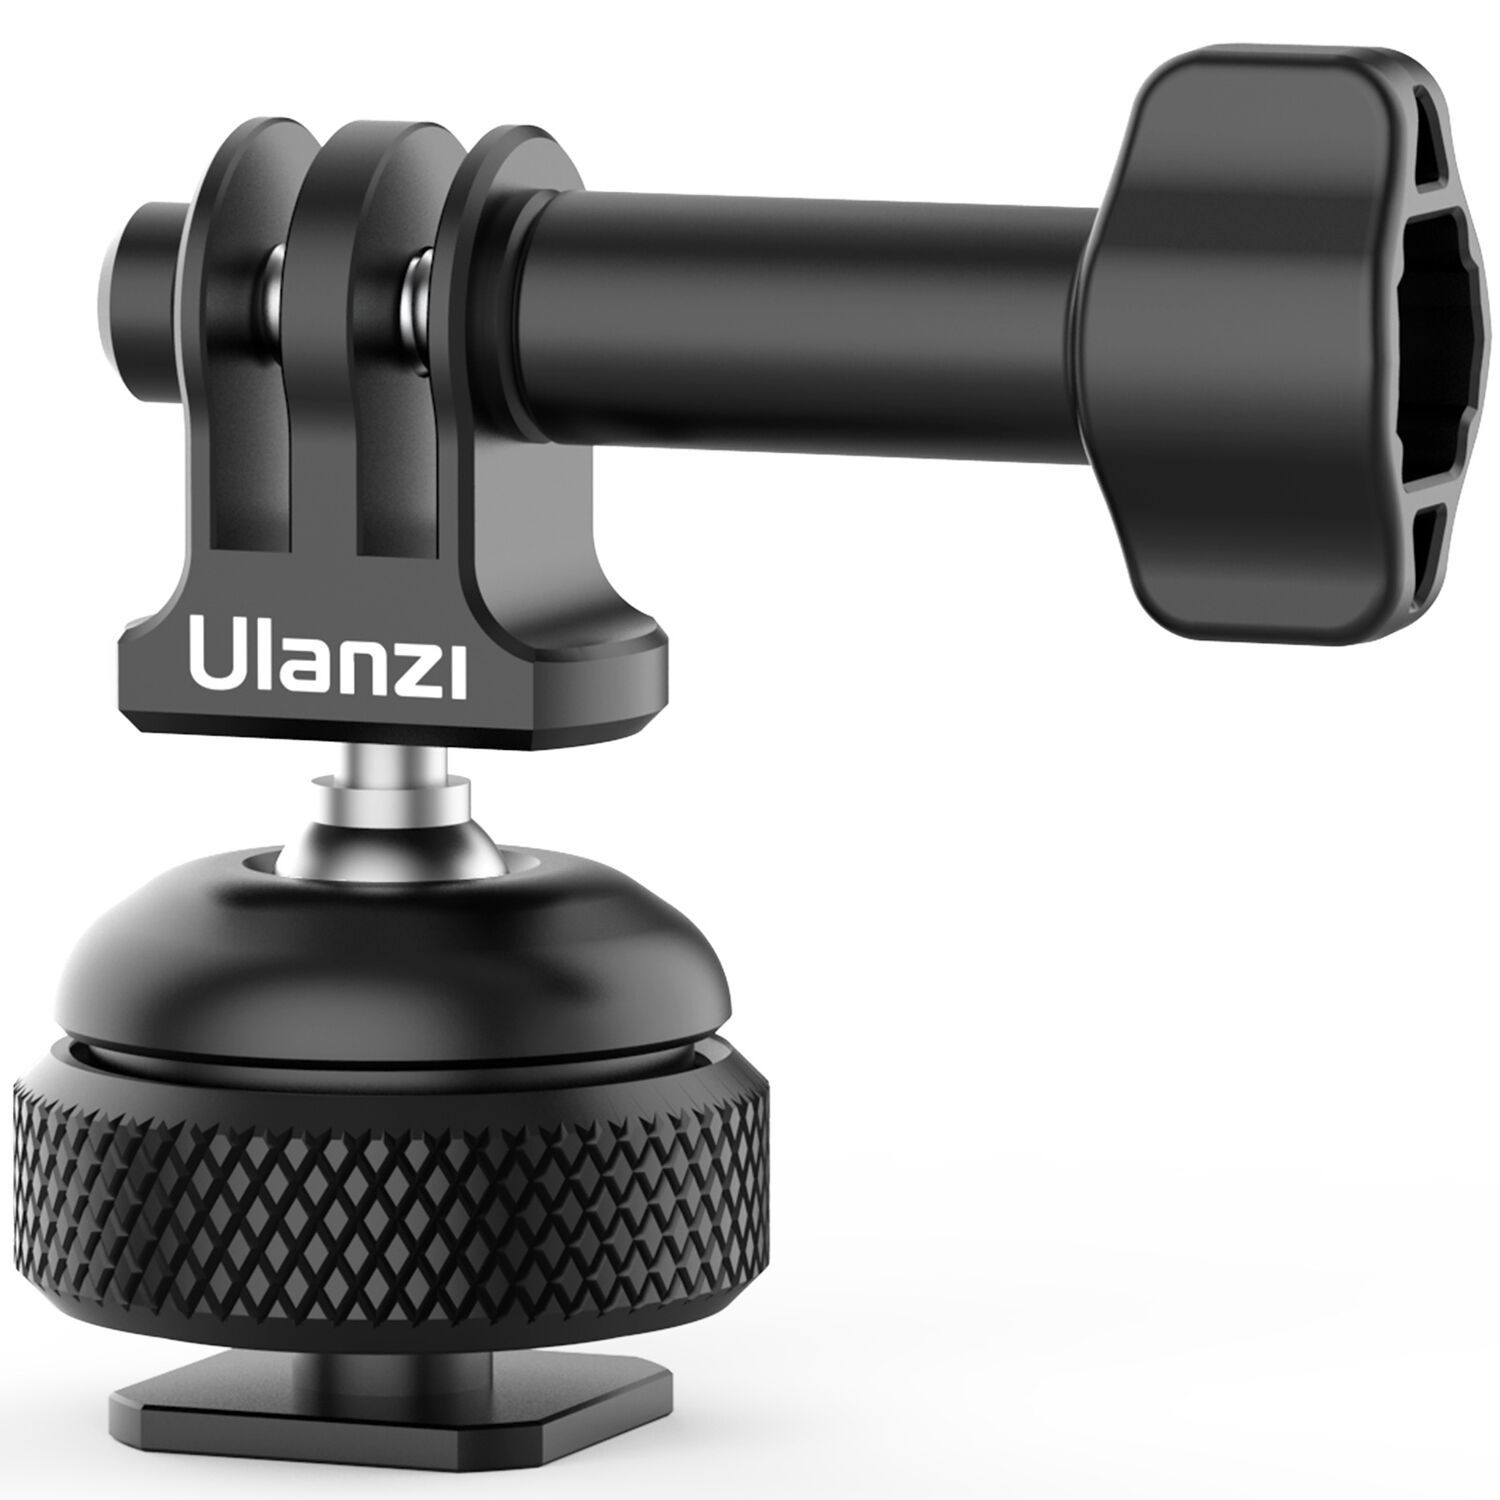 Ulanzi Universal Cold Shoe Mount for GoPro